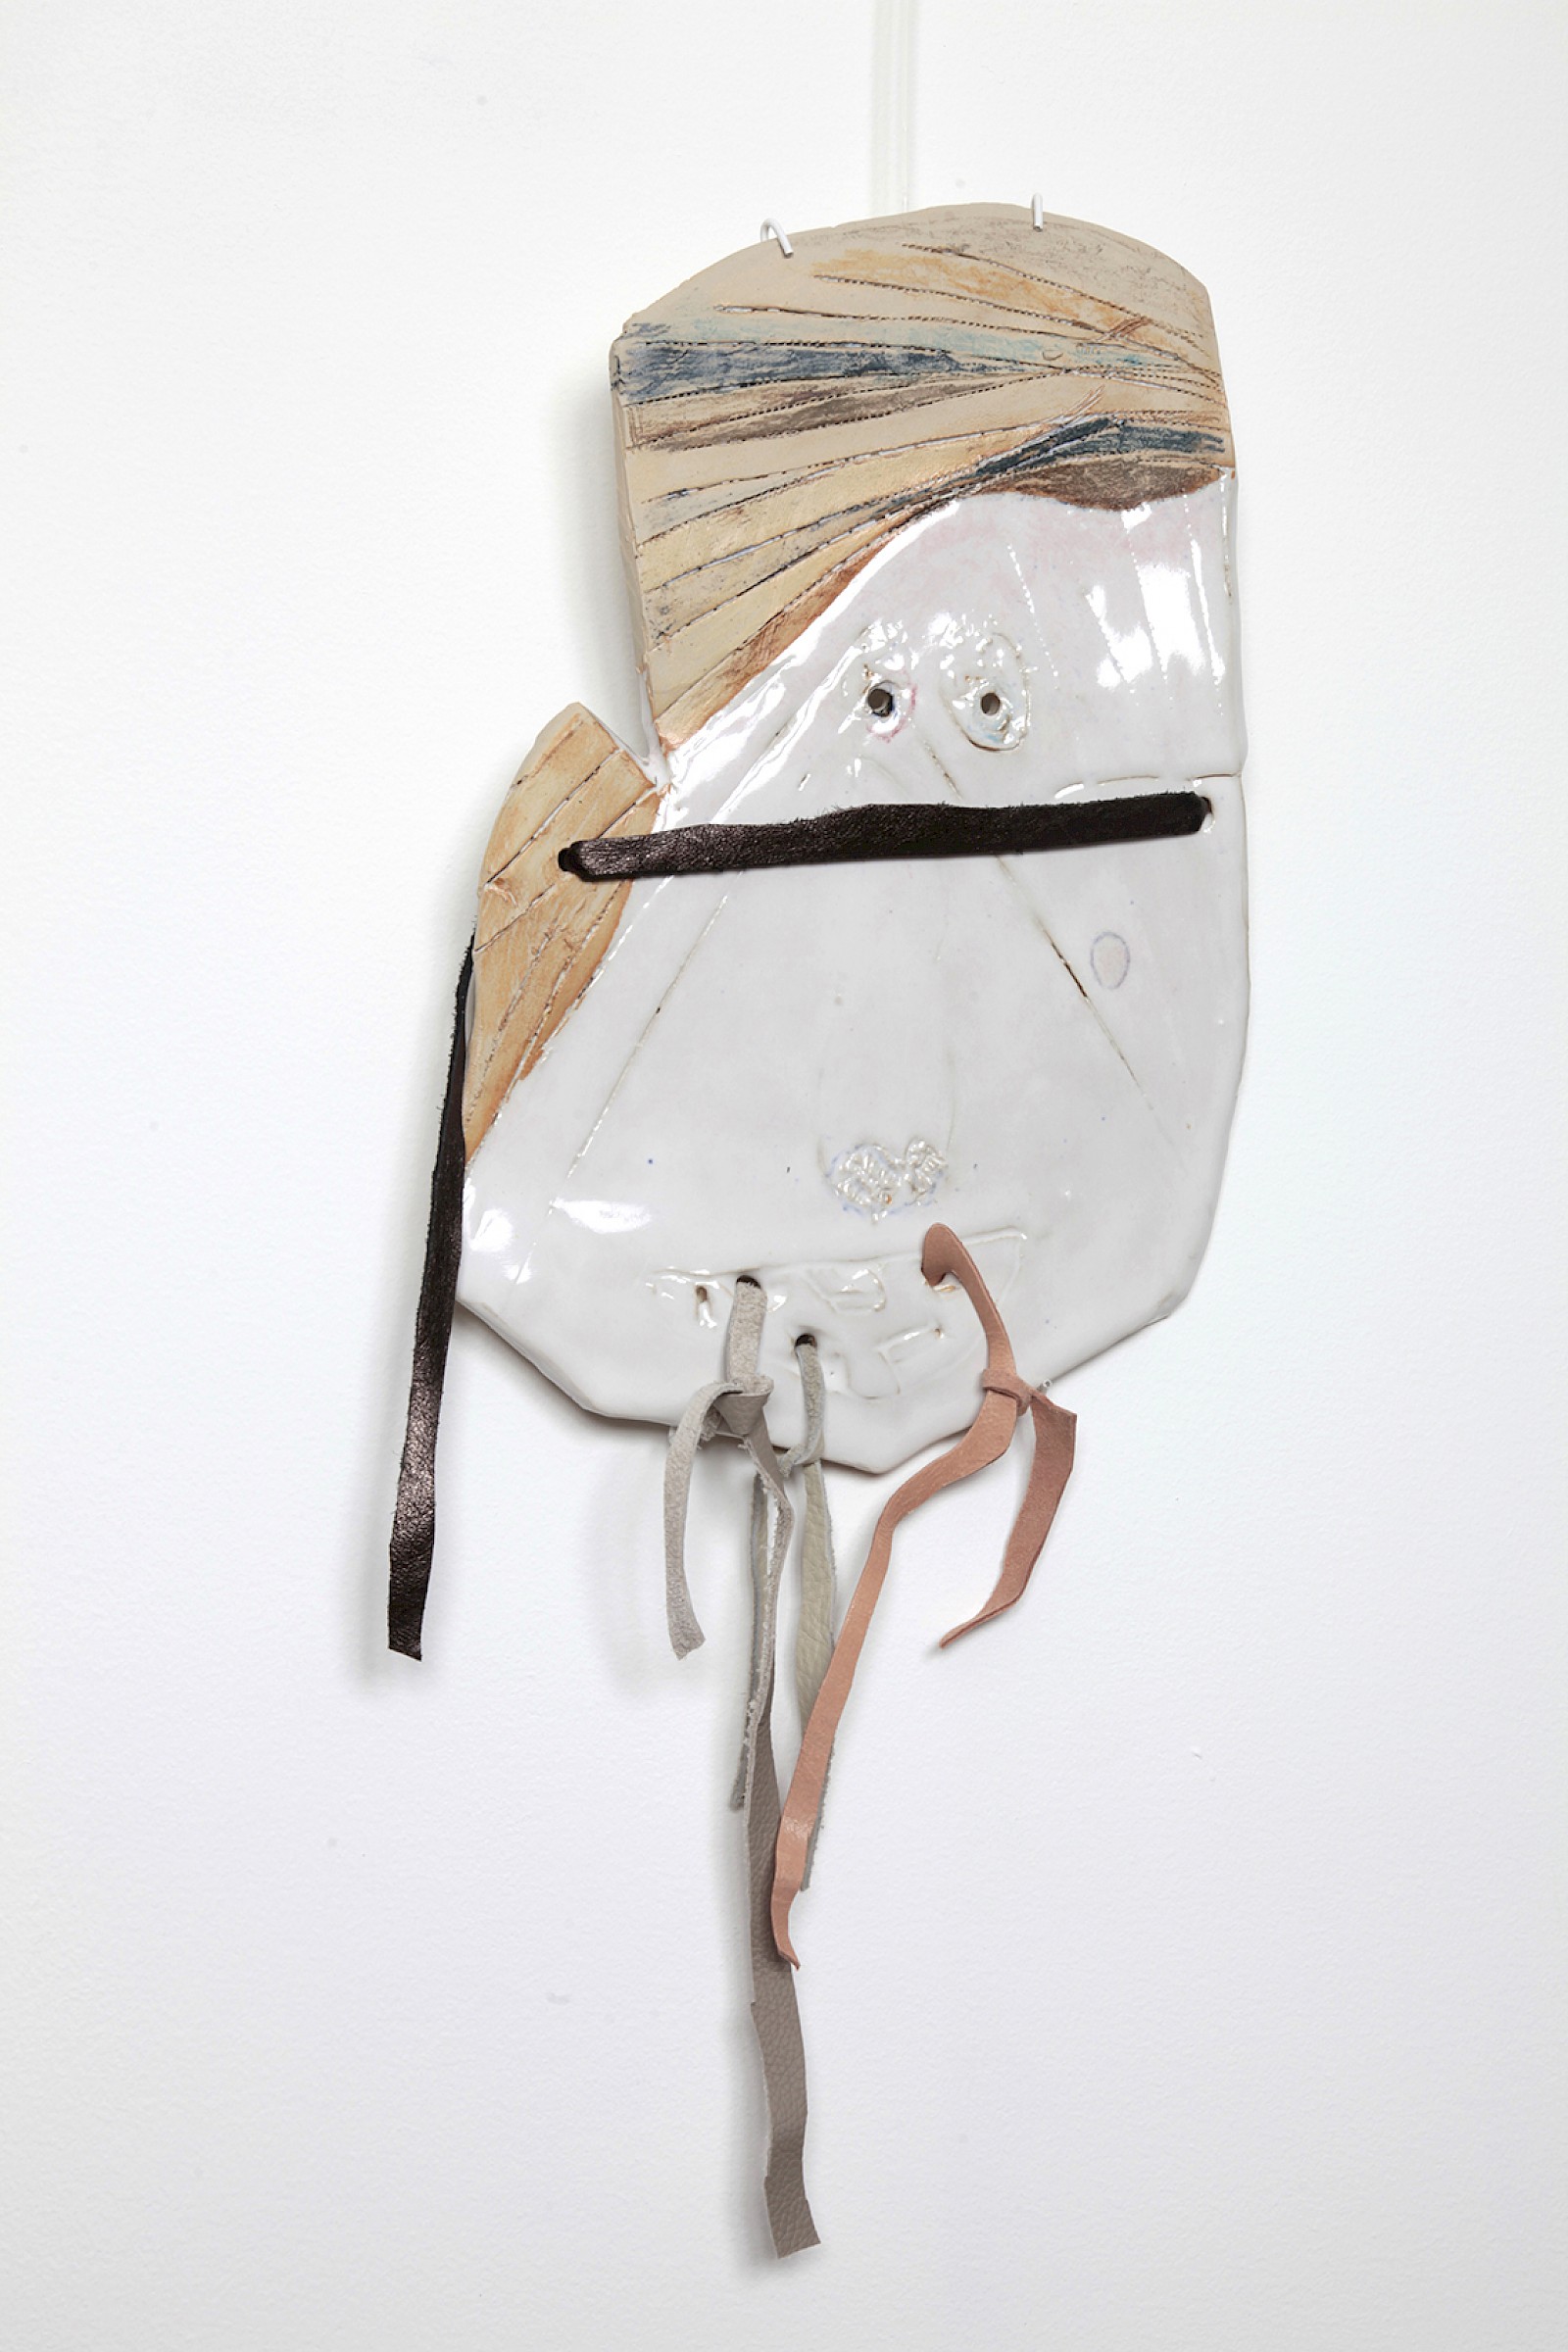 Image - Ceramic mask by Emilie Frosio